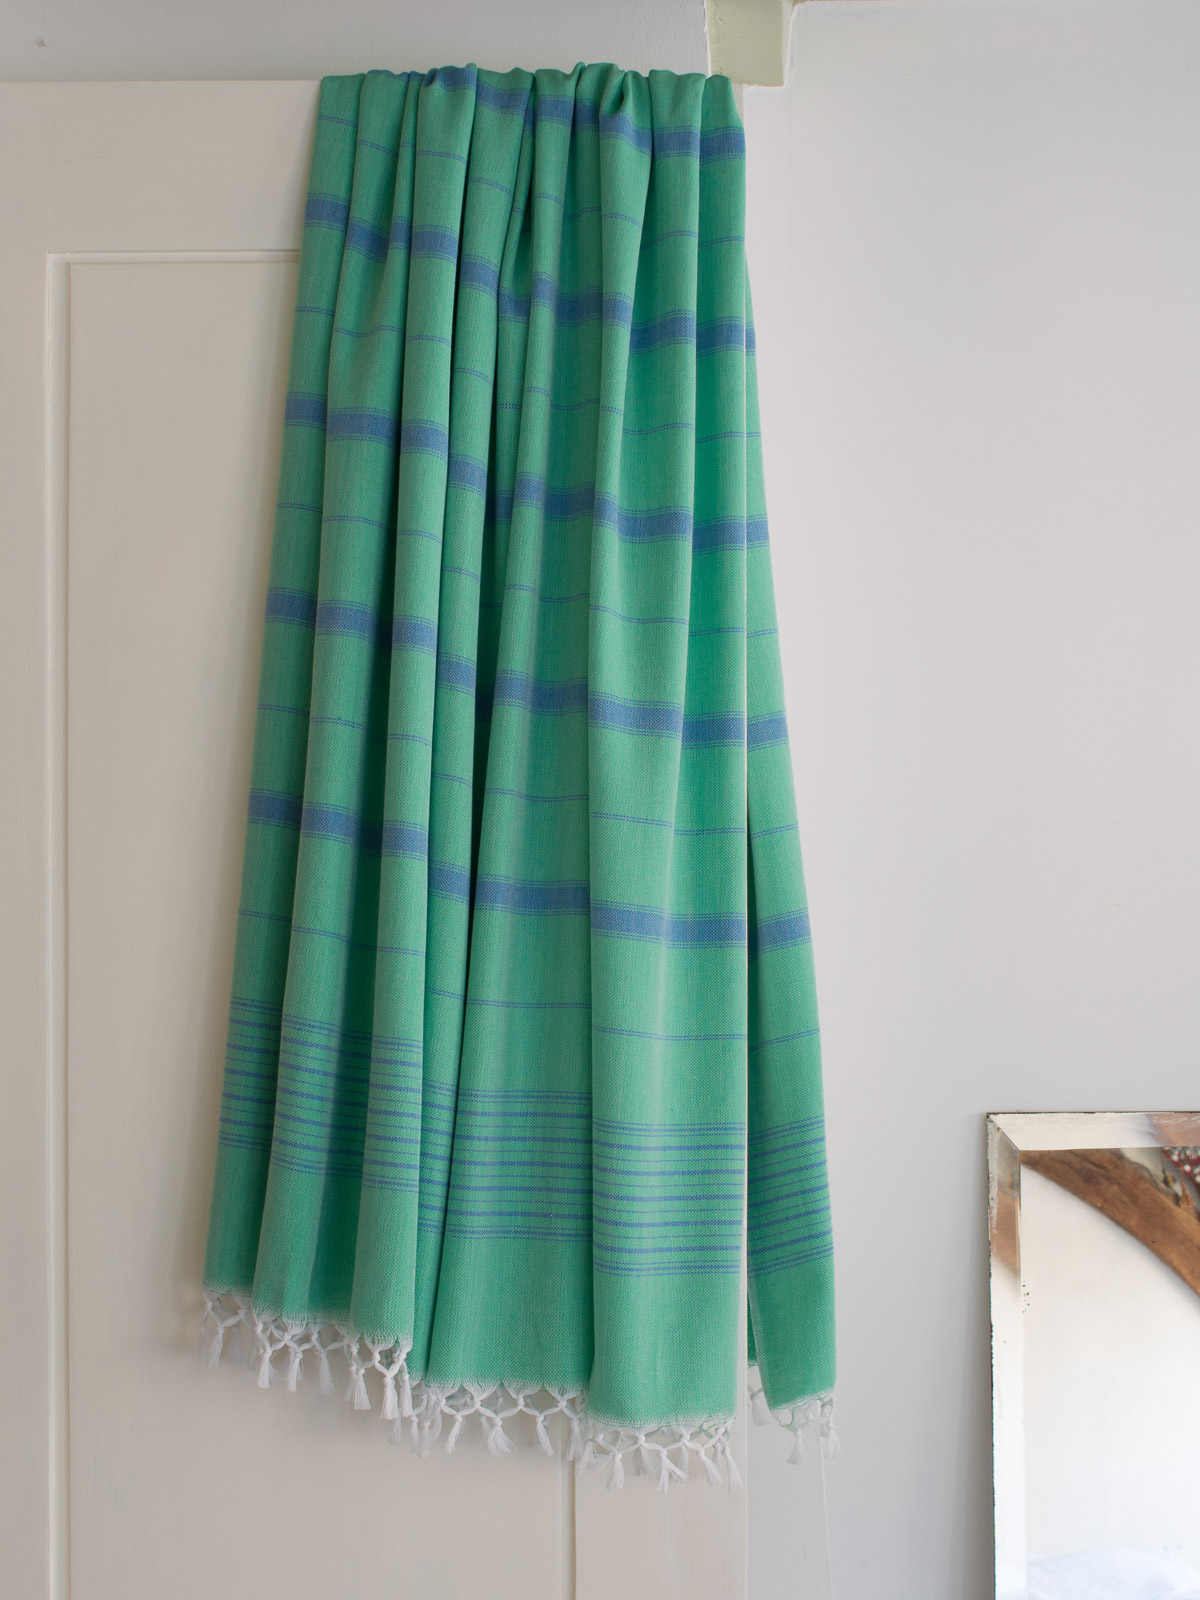 hammam towel XL jade green/ocean blue 220x160cm